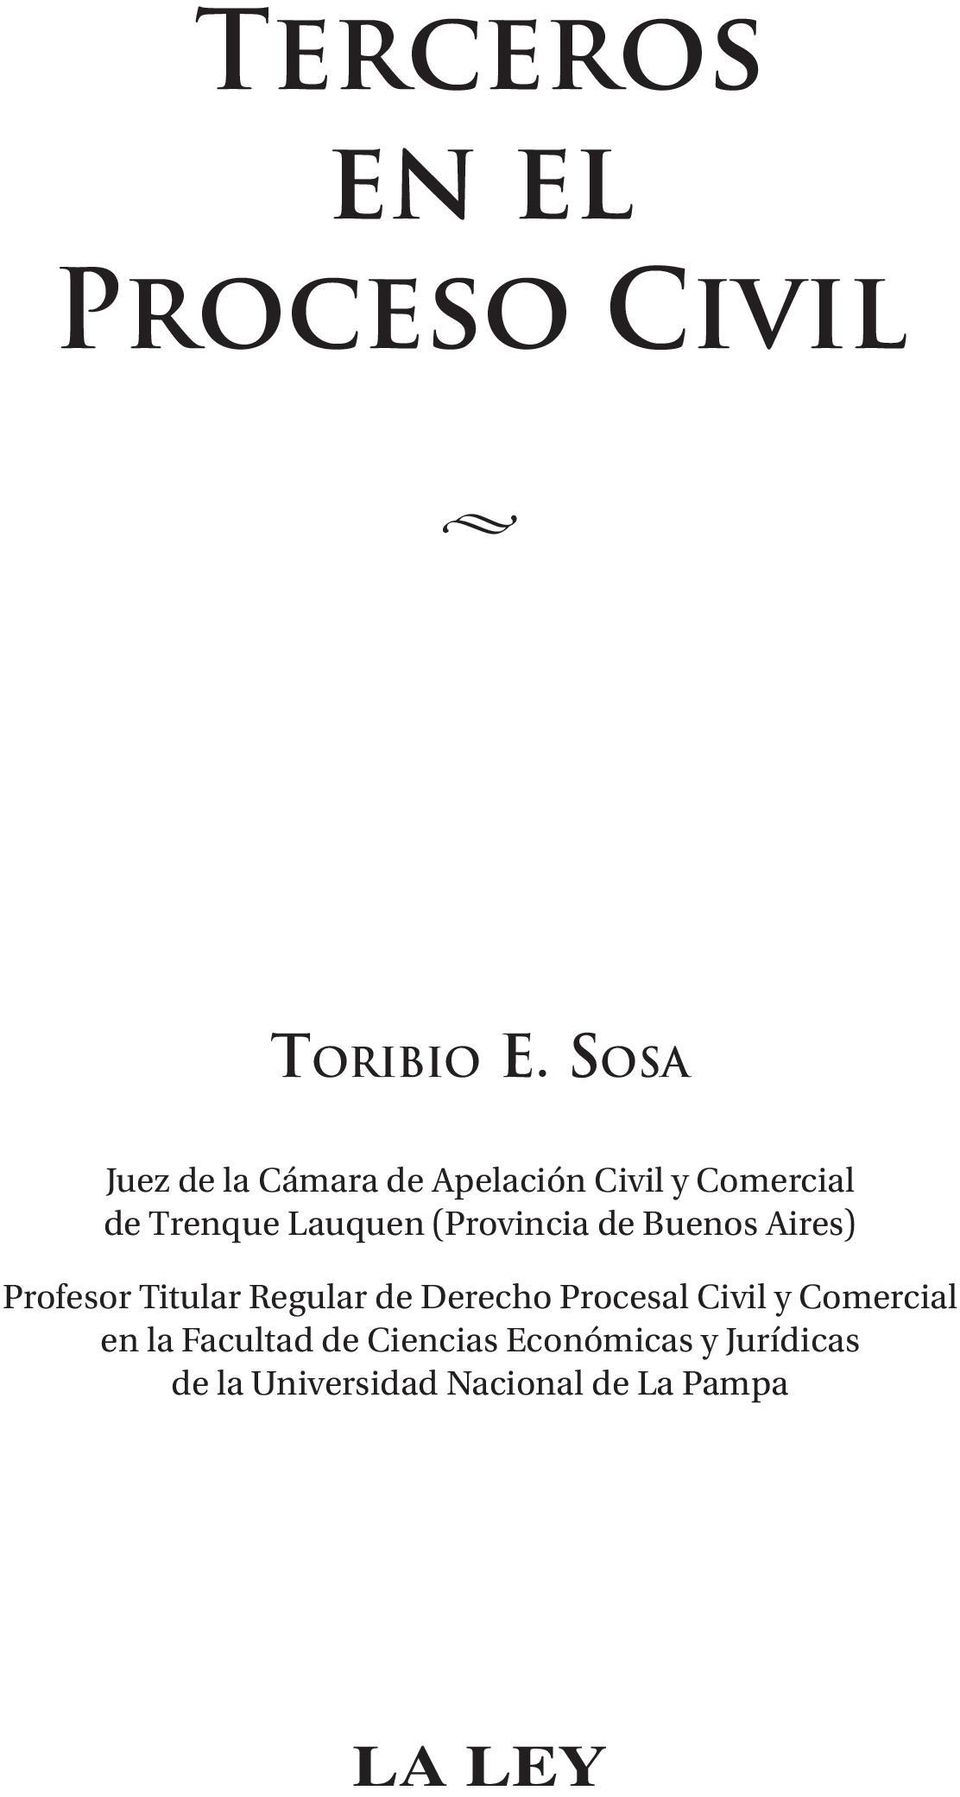 (Provincia de Buenos Aires) Profesor Titular Regular de Derecho Procesal